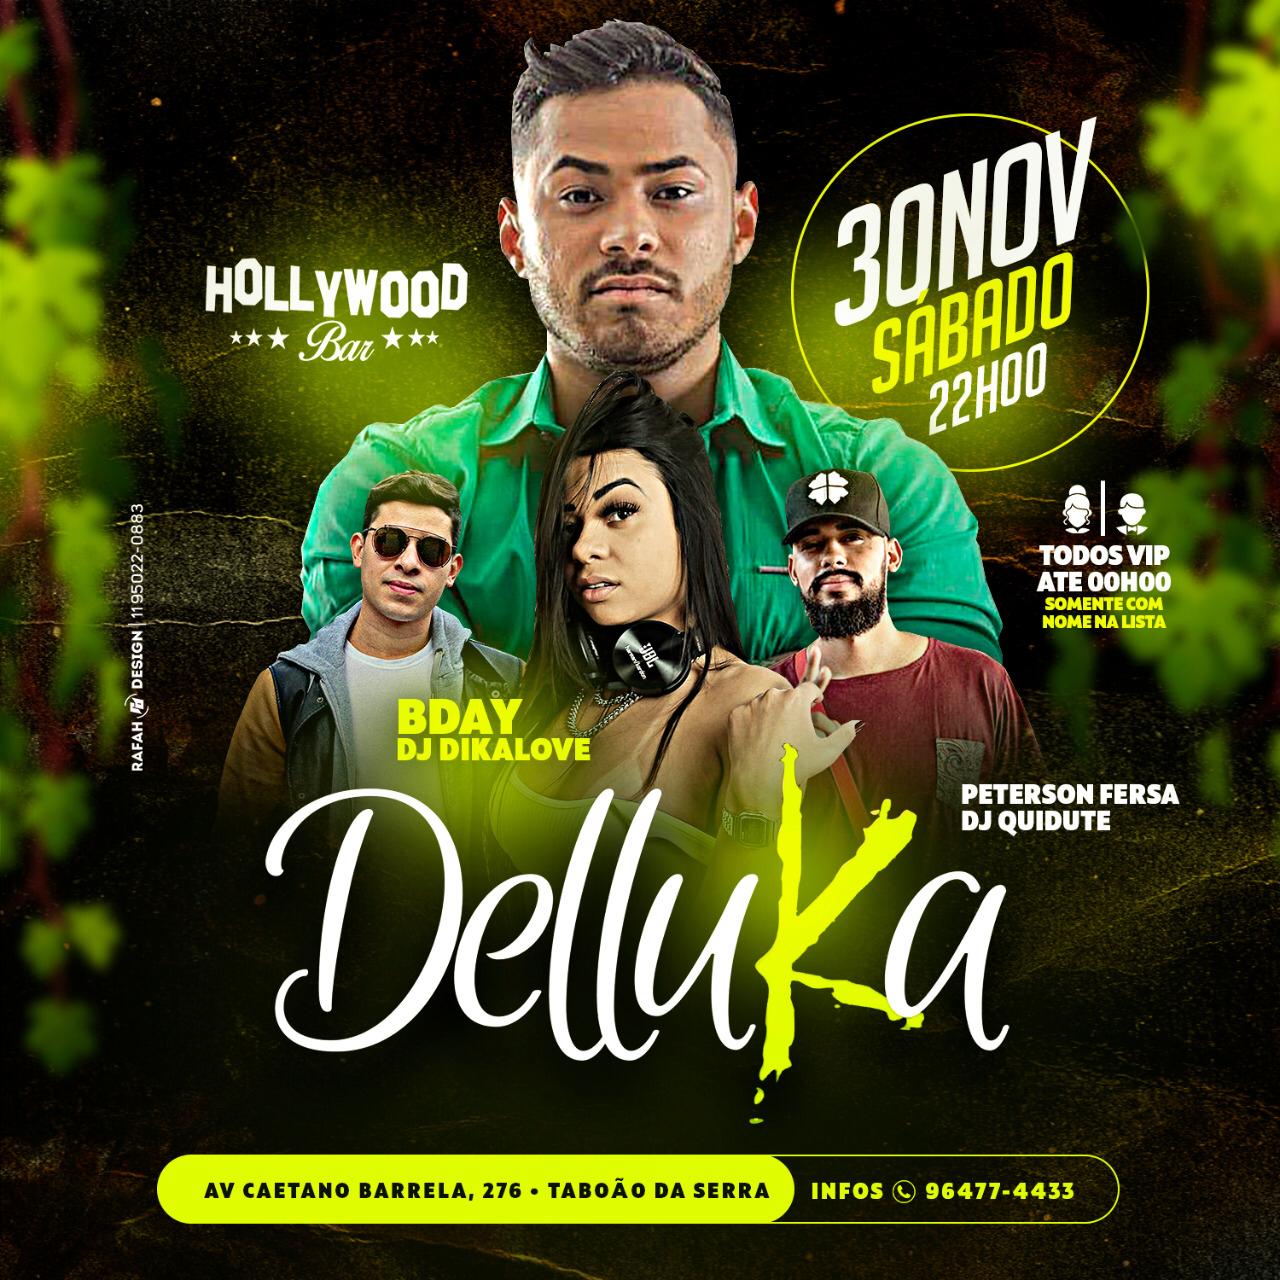 Hollywood Bar: B-day DikaLove c/ Dellluka - Sábado 30/11- 